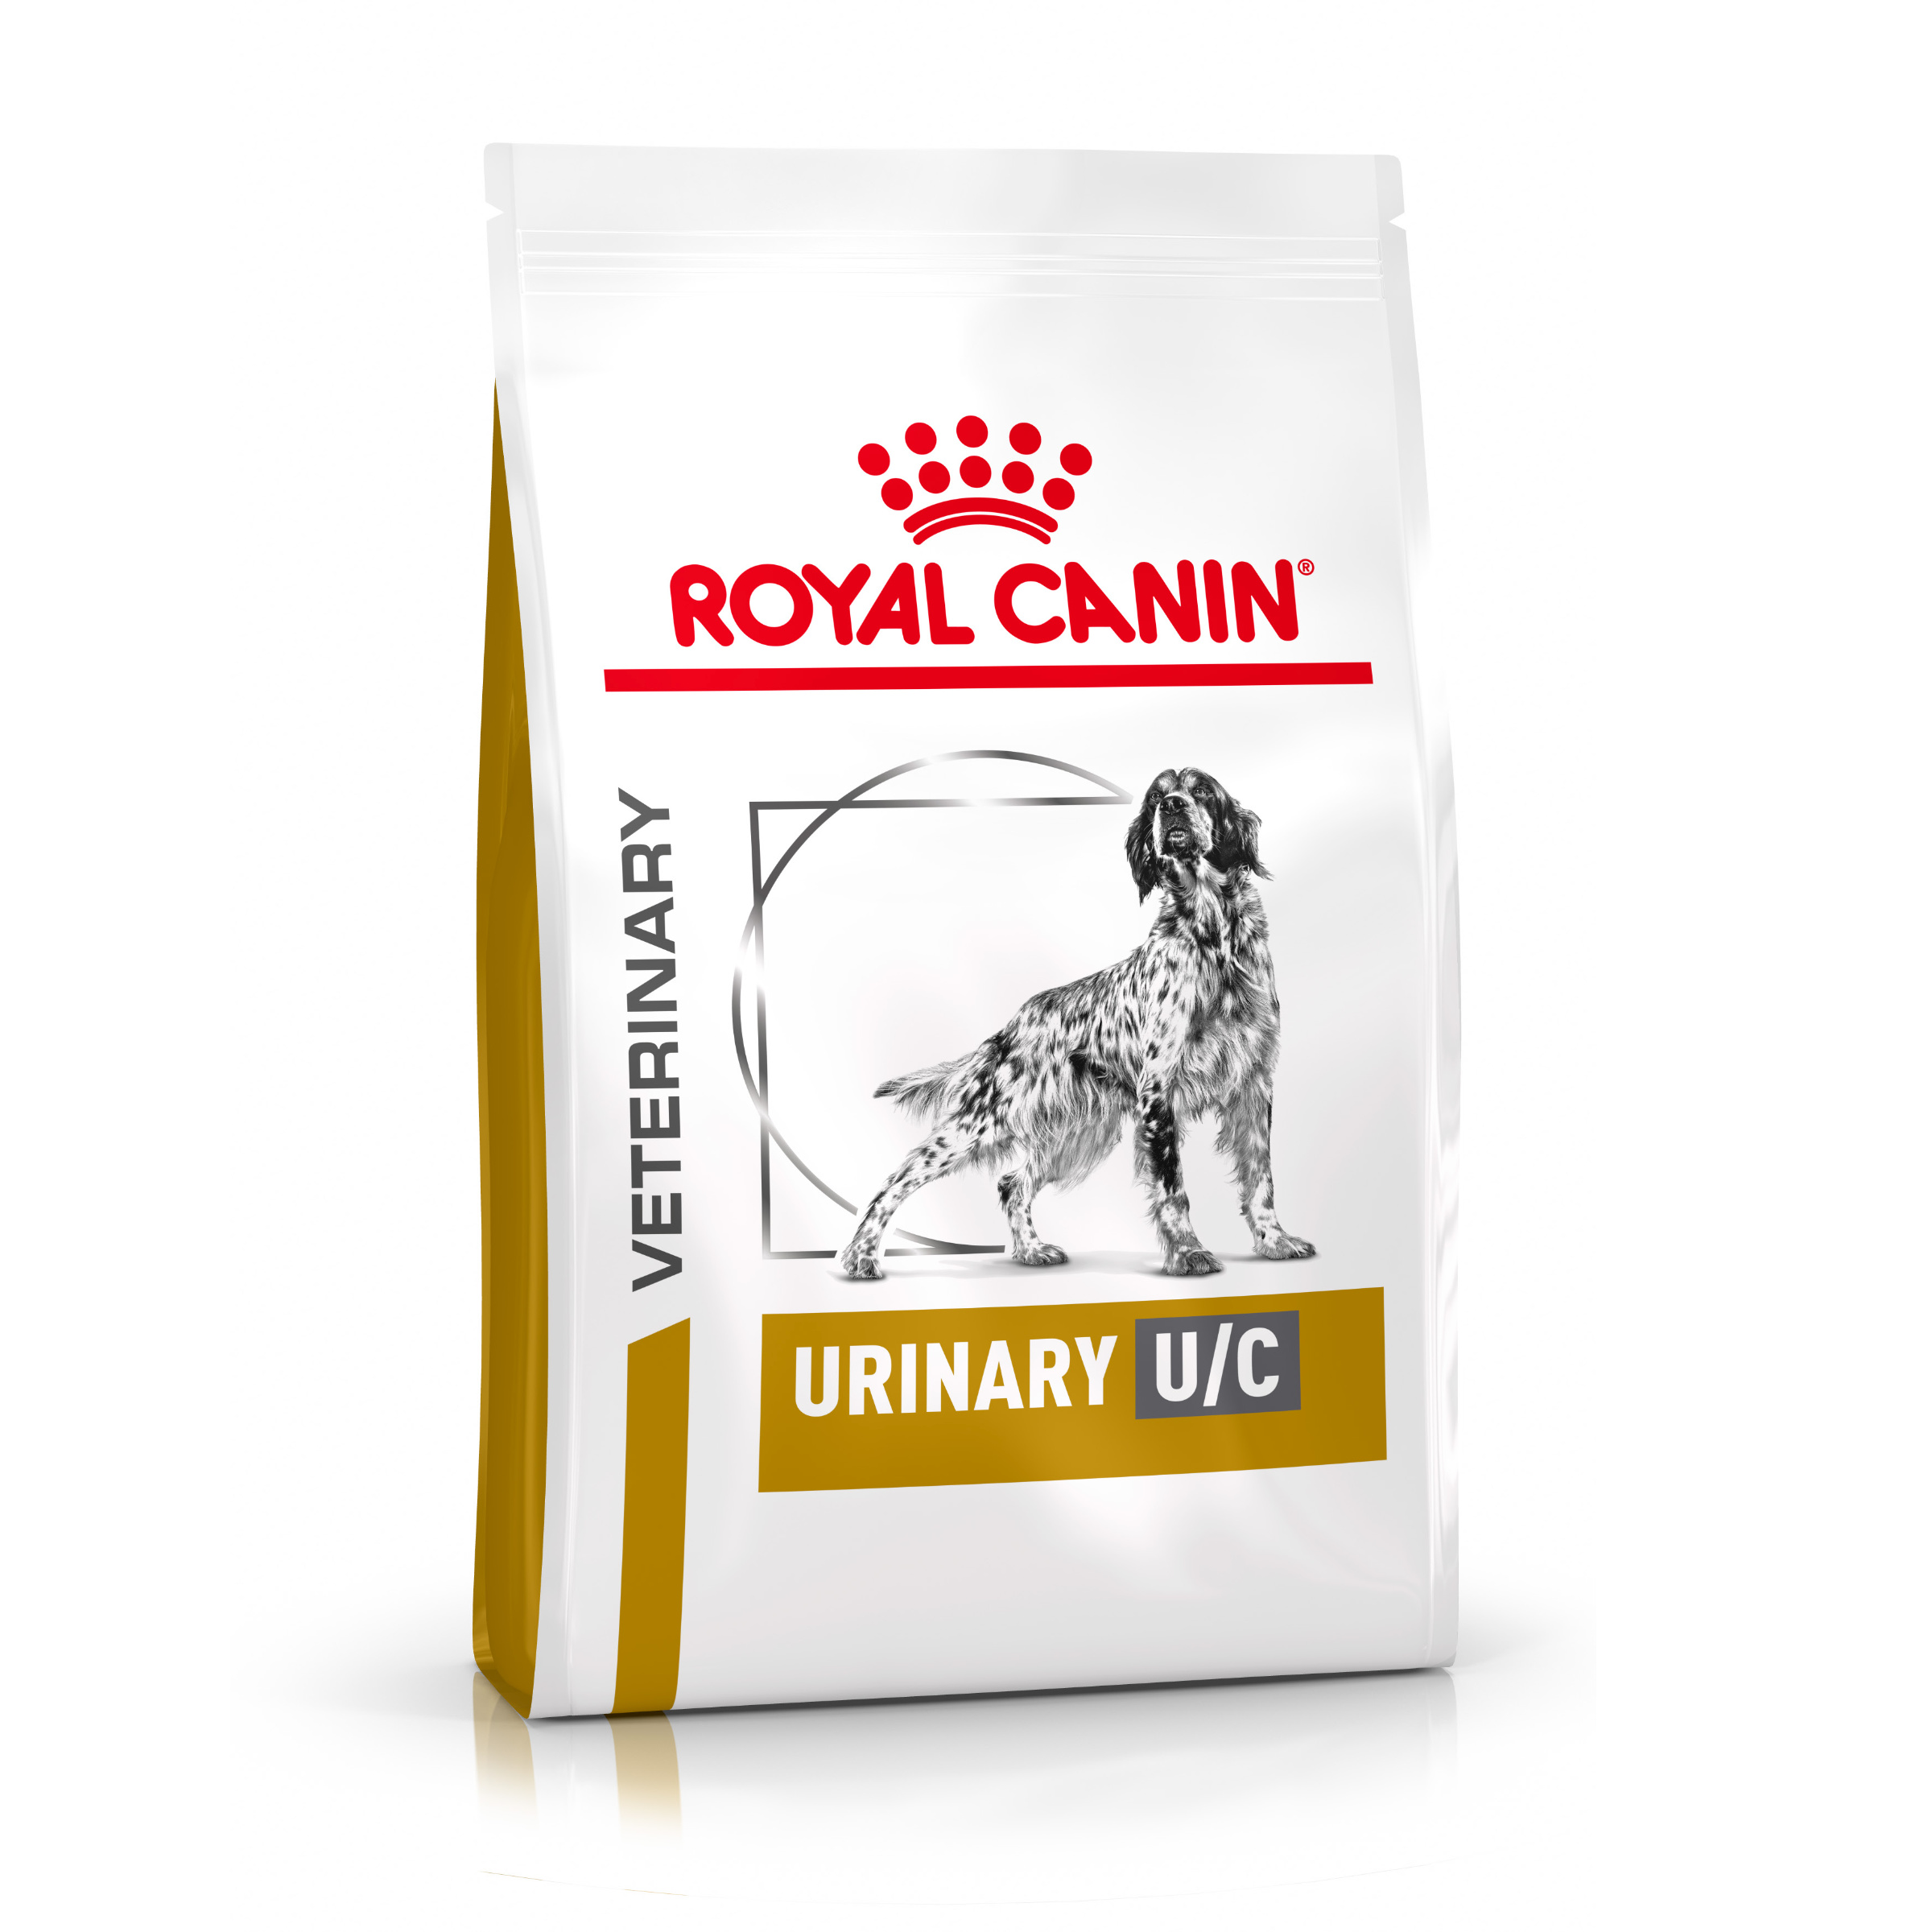 Royal Canin Veterinary Health Nutrition Dog URINARY U/C - 14kg